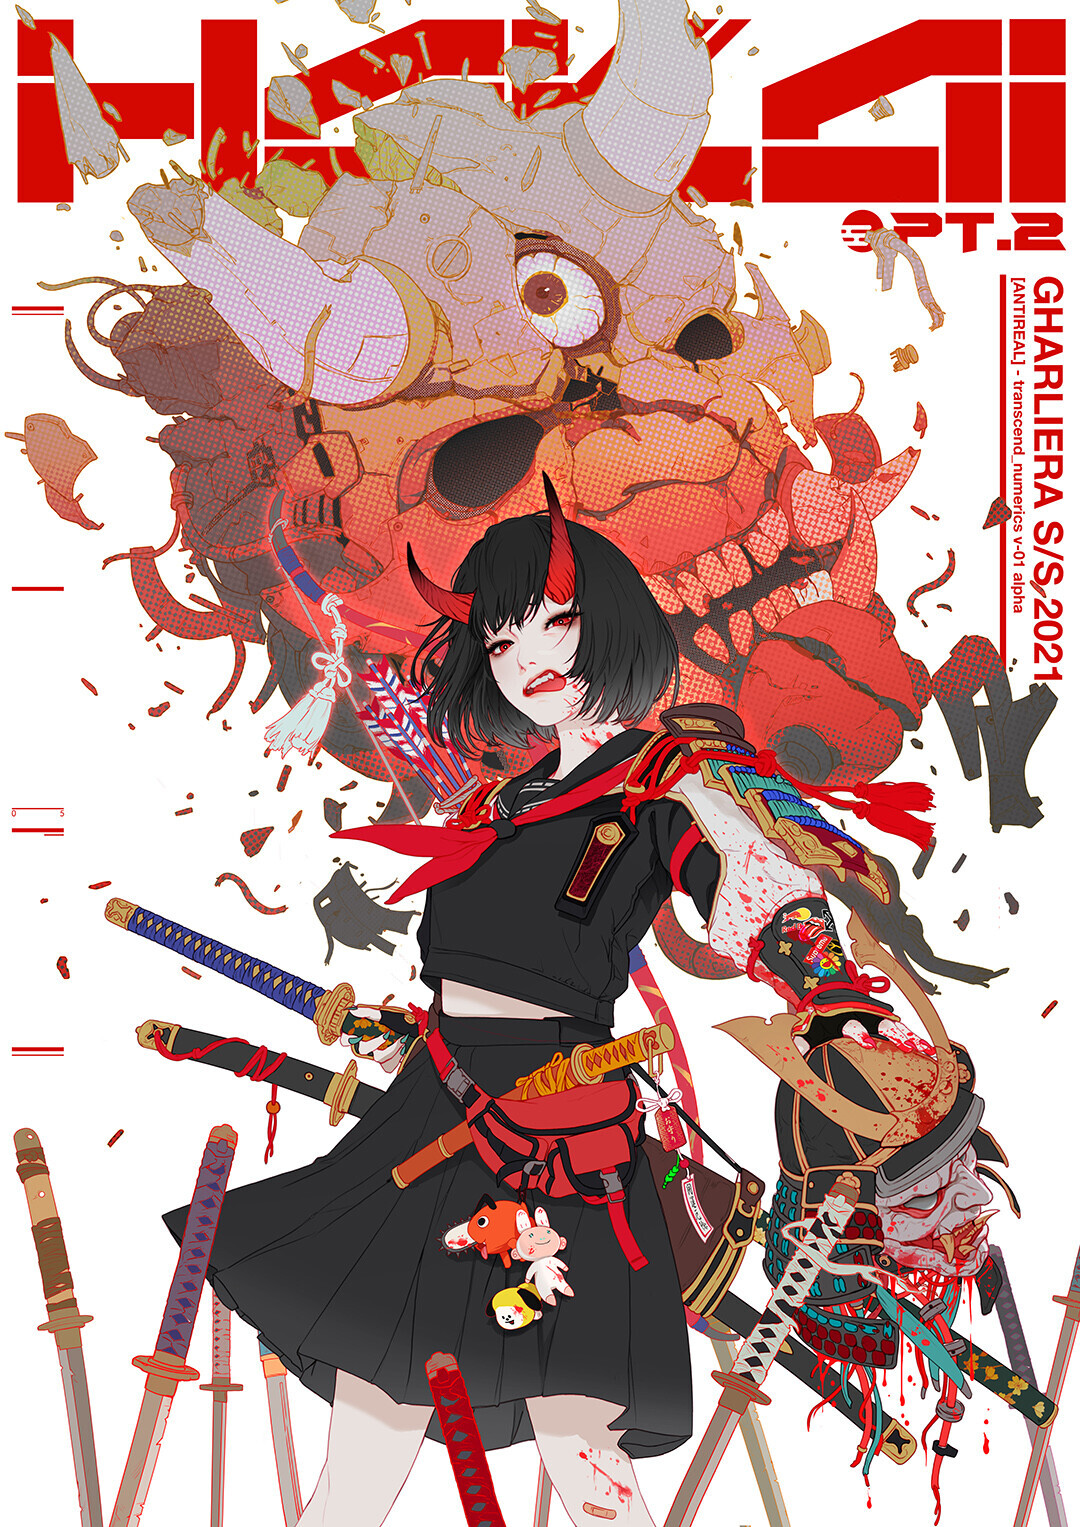 Demon Katana Anime Sword Weapon Red Eyes Black Hair Shoulder Length Hair Fantasy Art Fantasy Girl An 1080x1527